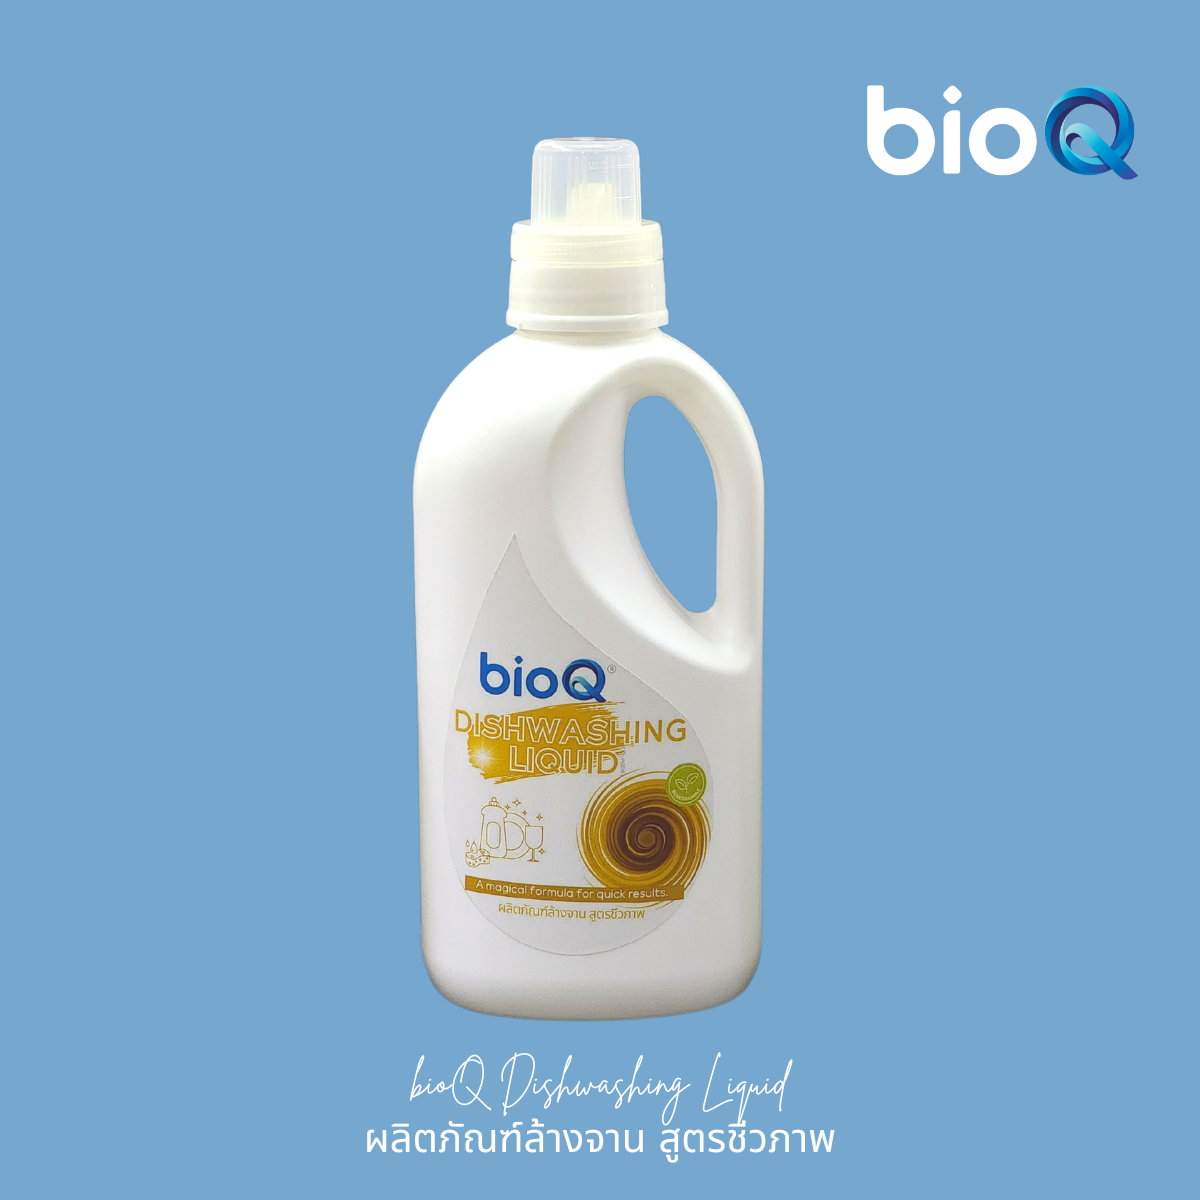 bioQ DISHWASHING LIQUID 1000ml. ผลิตภัณฑ์ทำความสะอาด ล้างจาน